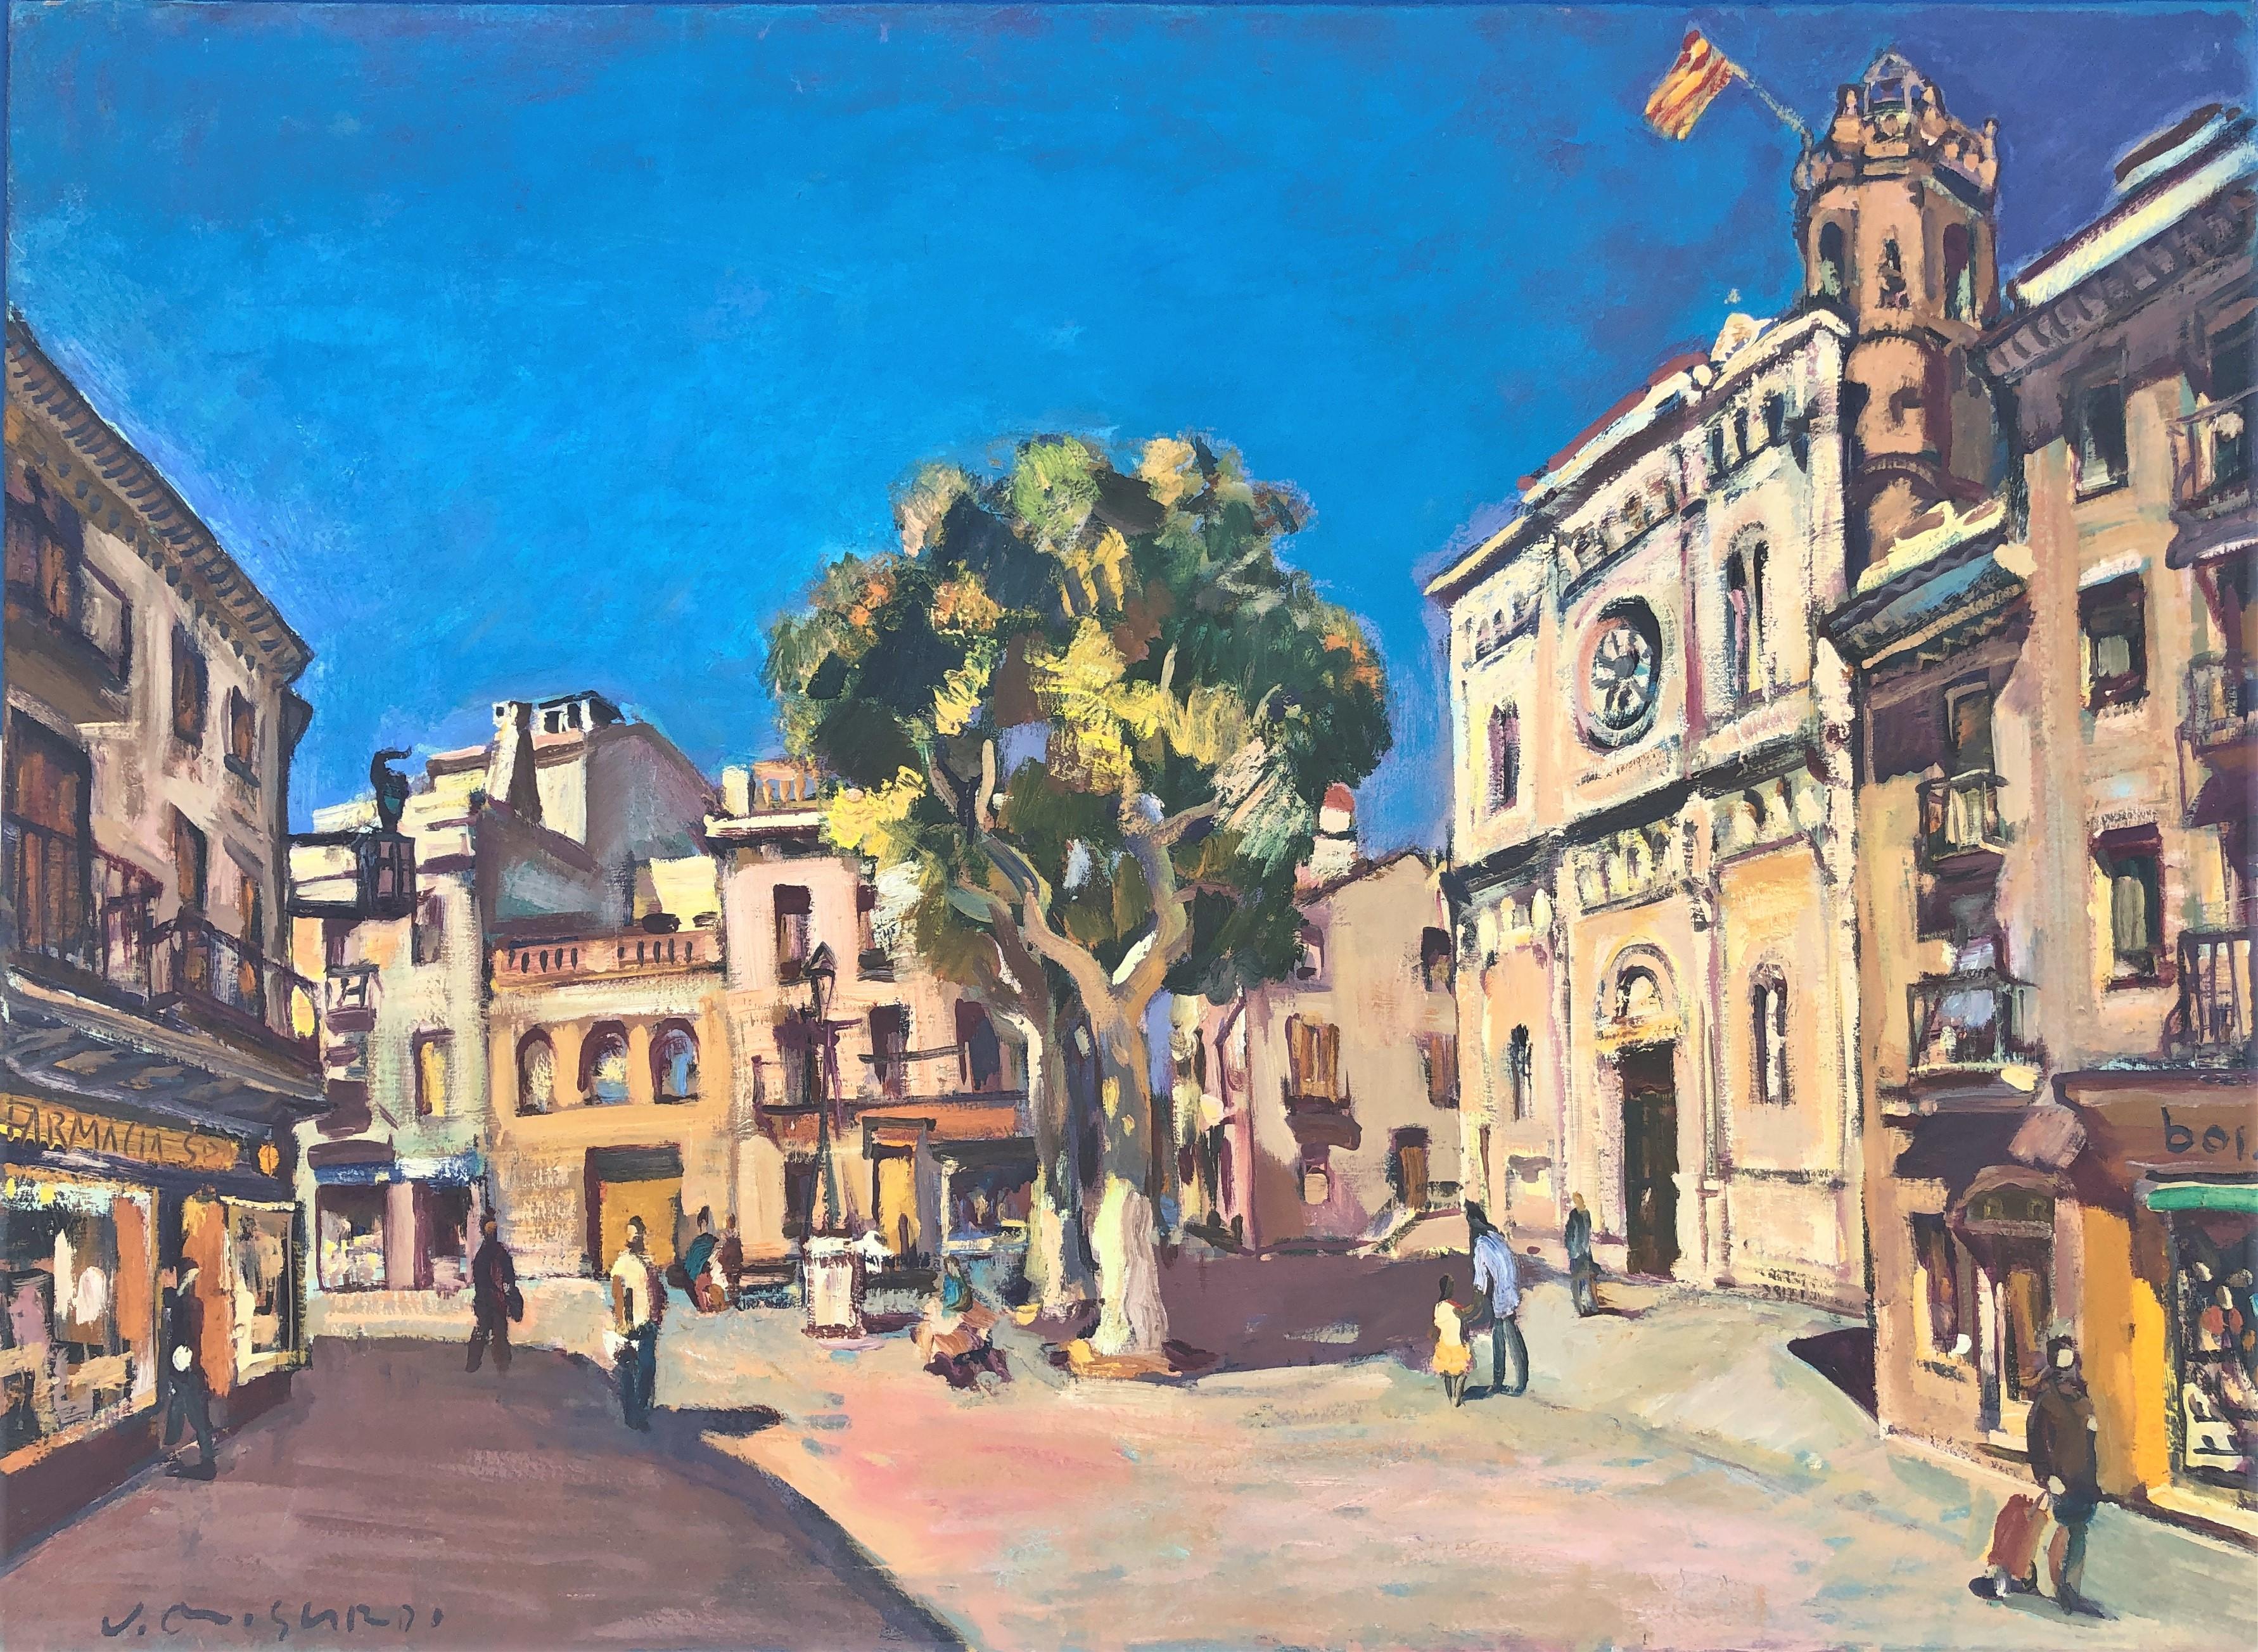 Santa Maria square Mataro Spain oil on canvas painting urbanscape